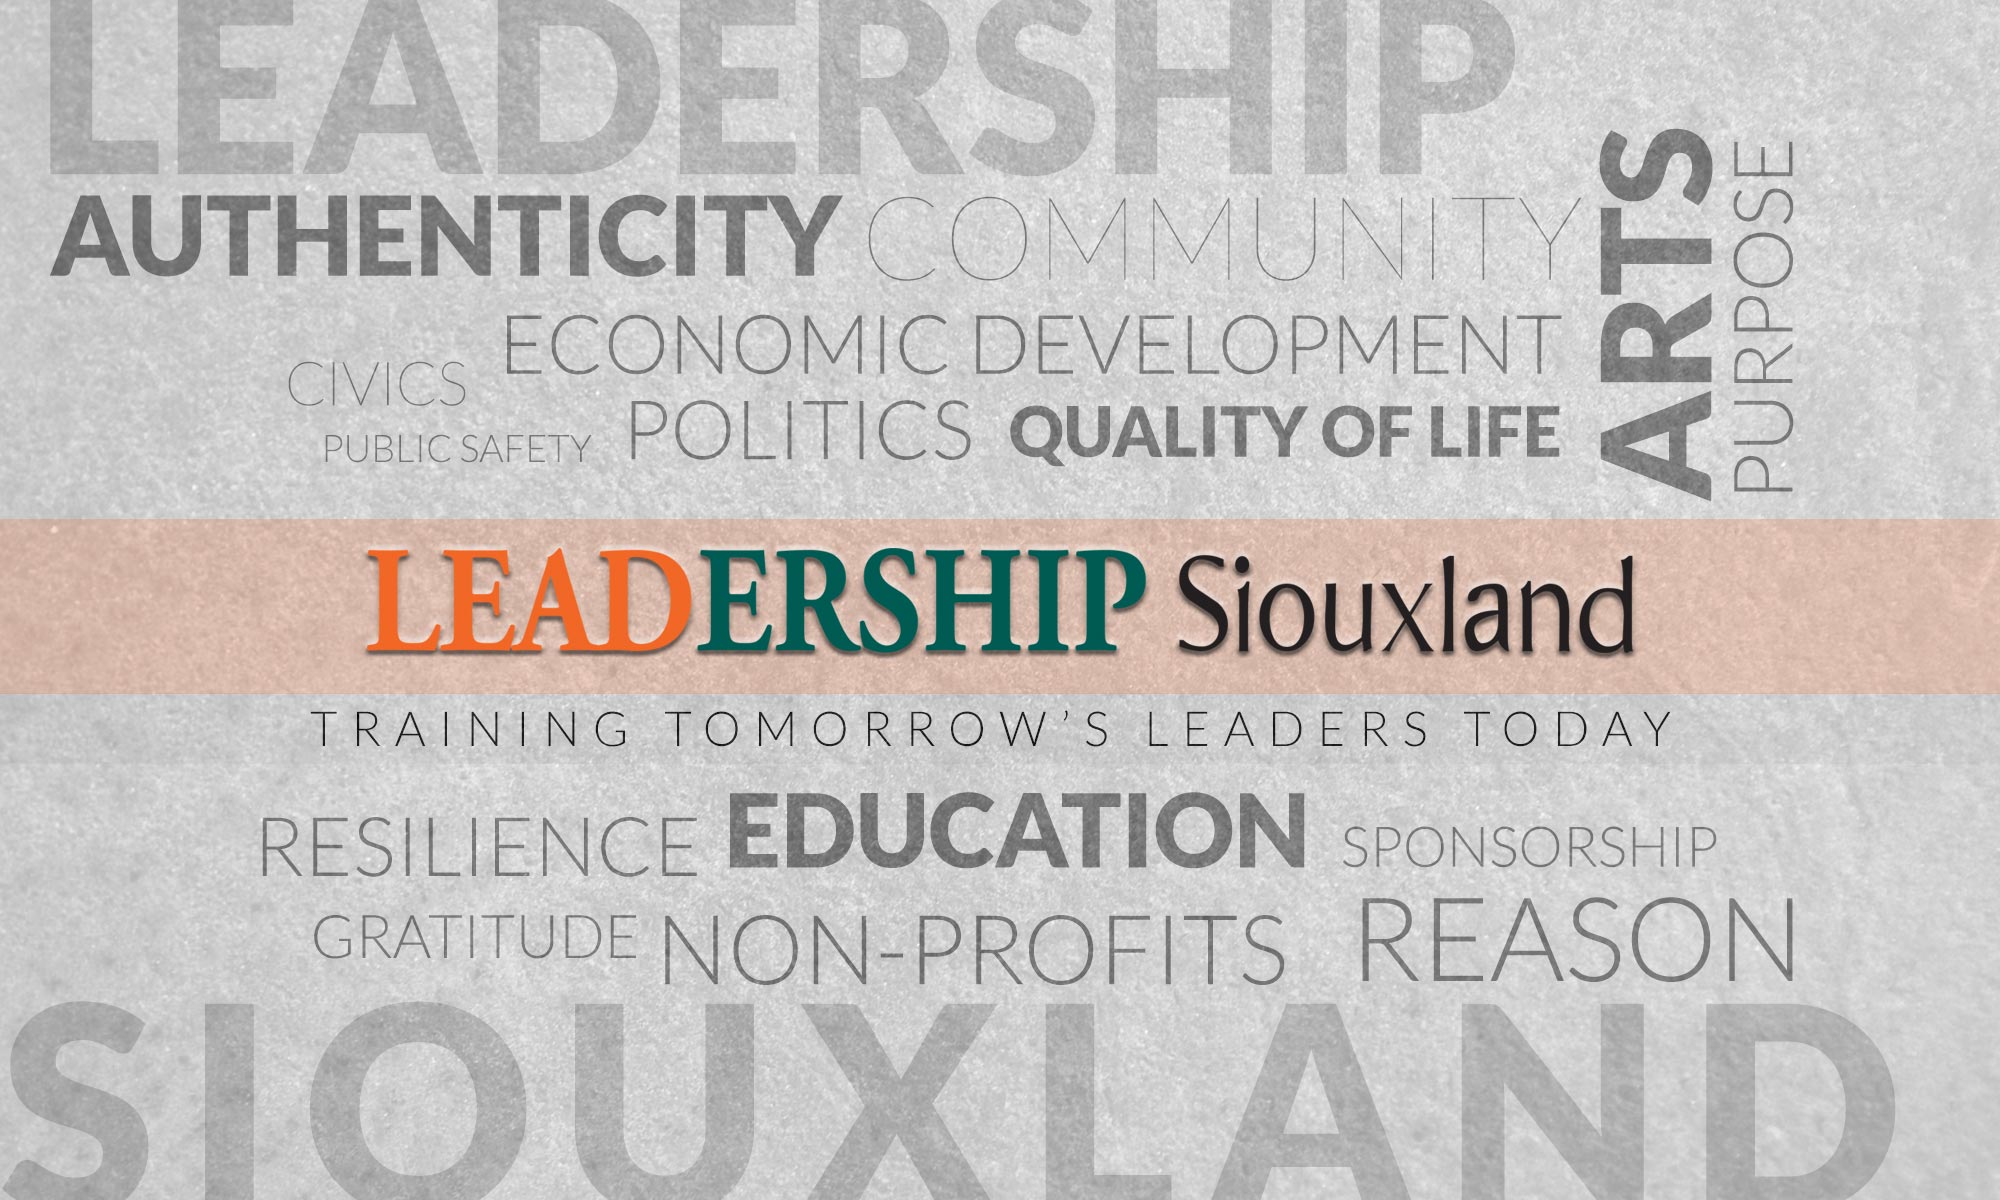 Leadership Siouxland